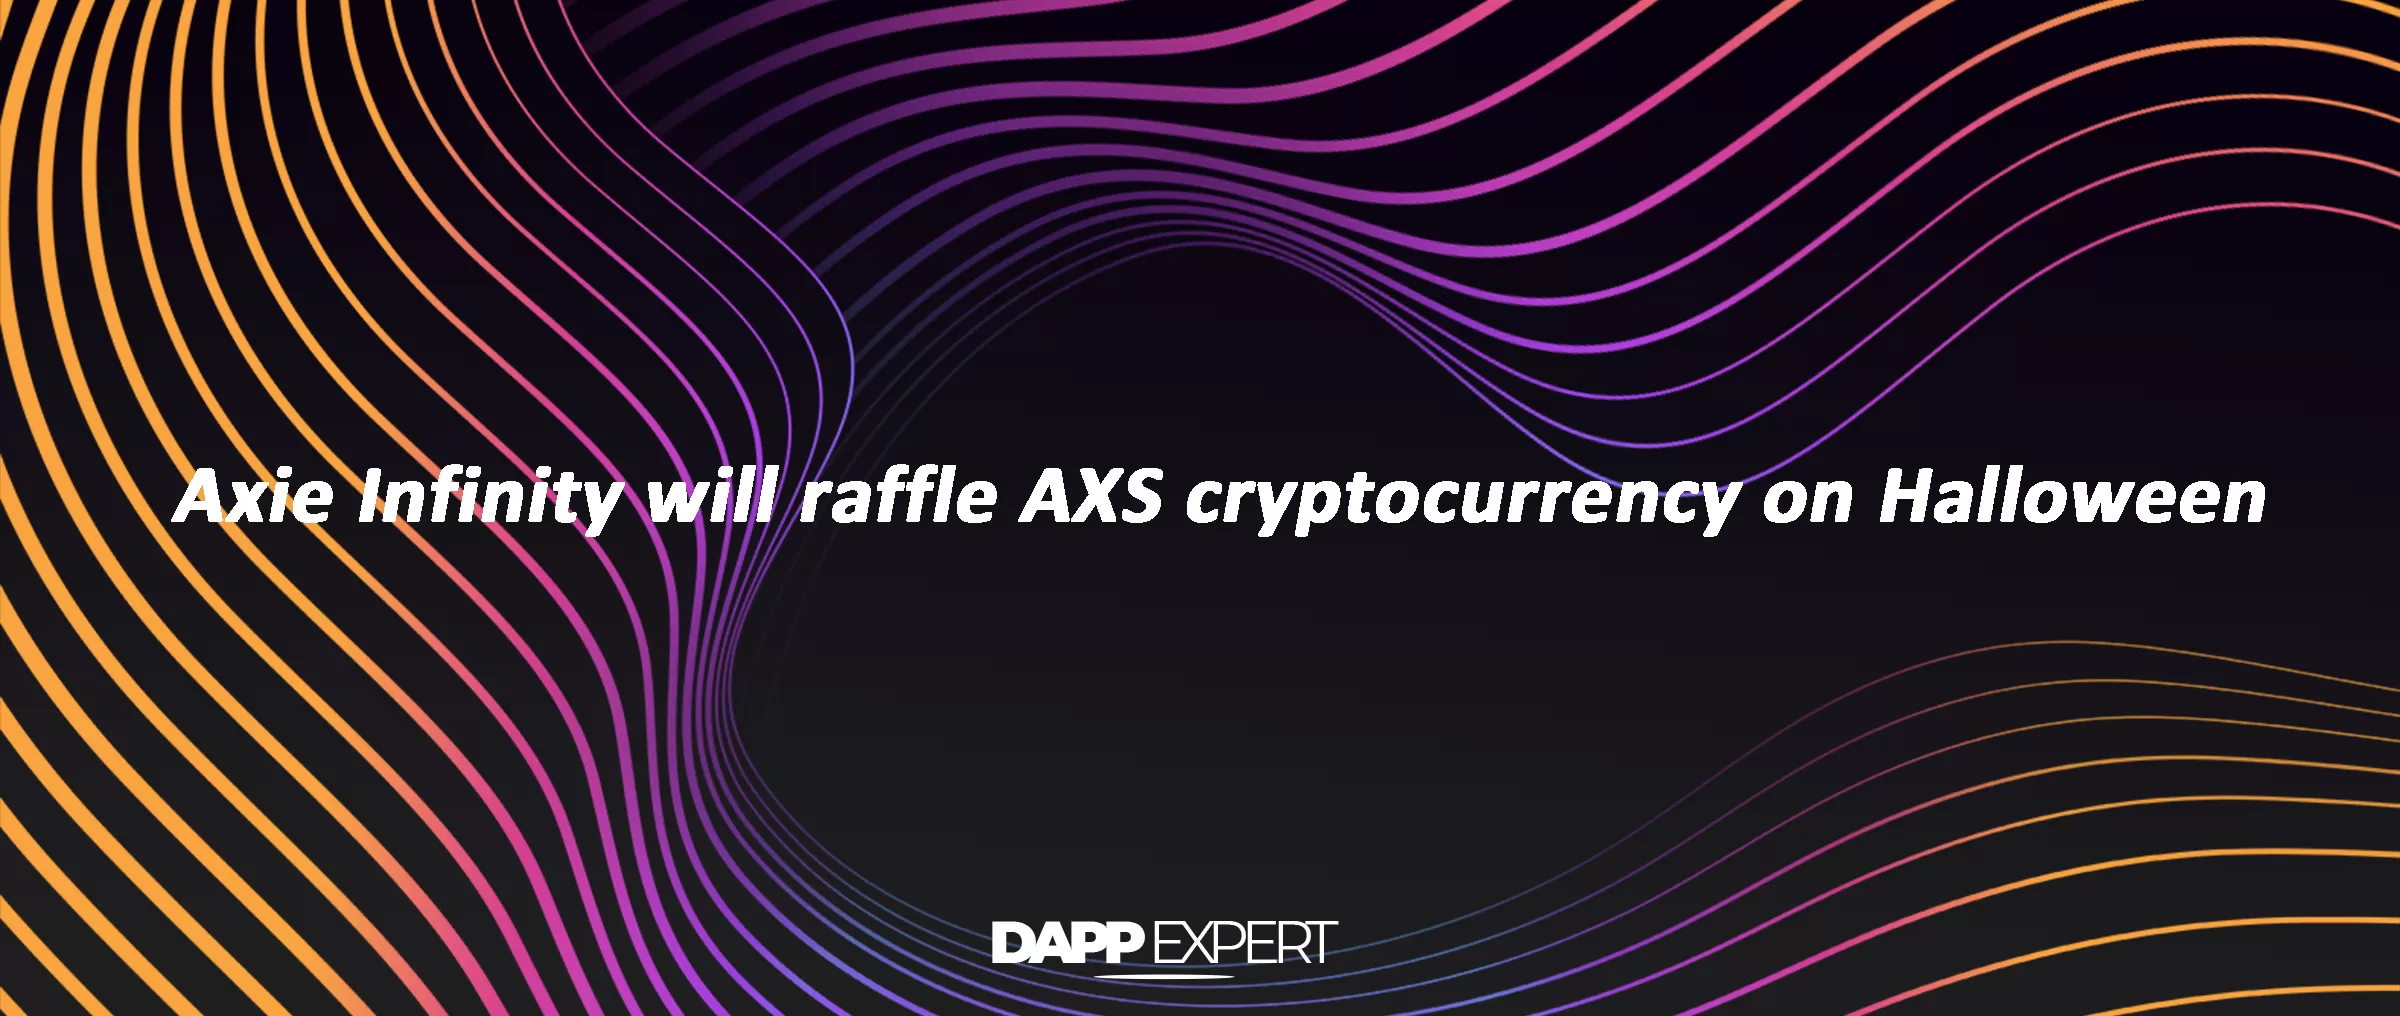 Axie Infinity will raffle AXS cryptocurrency on Halloween